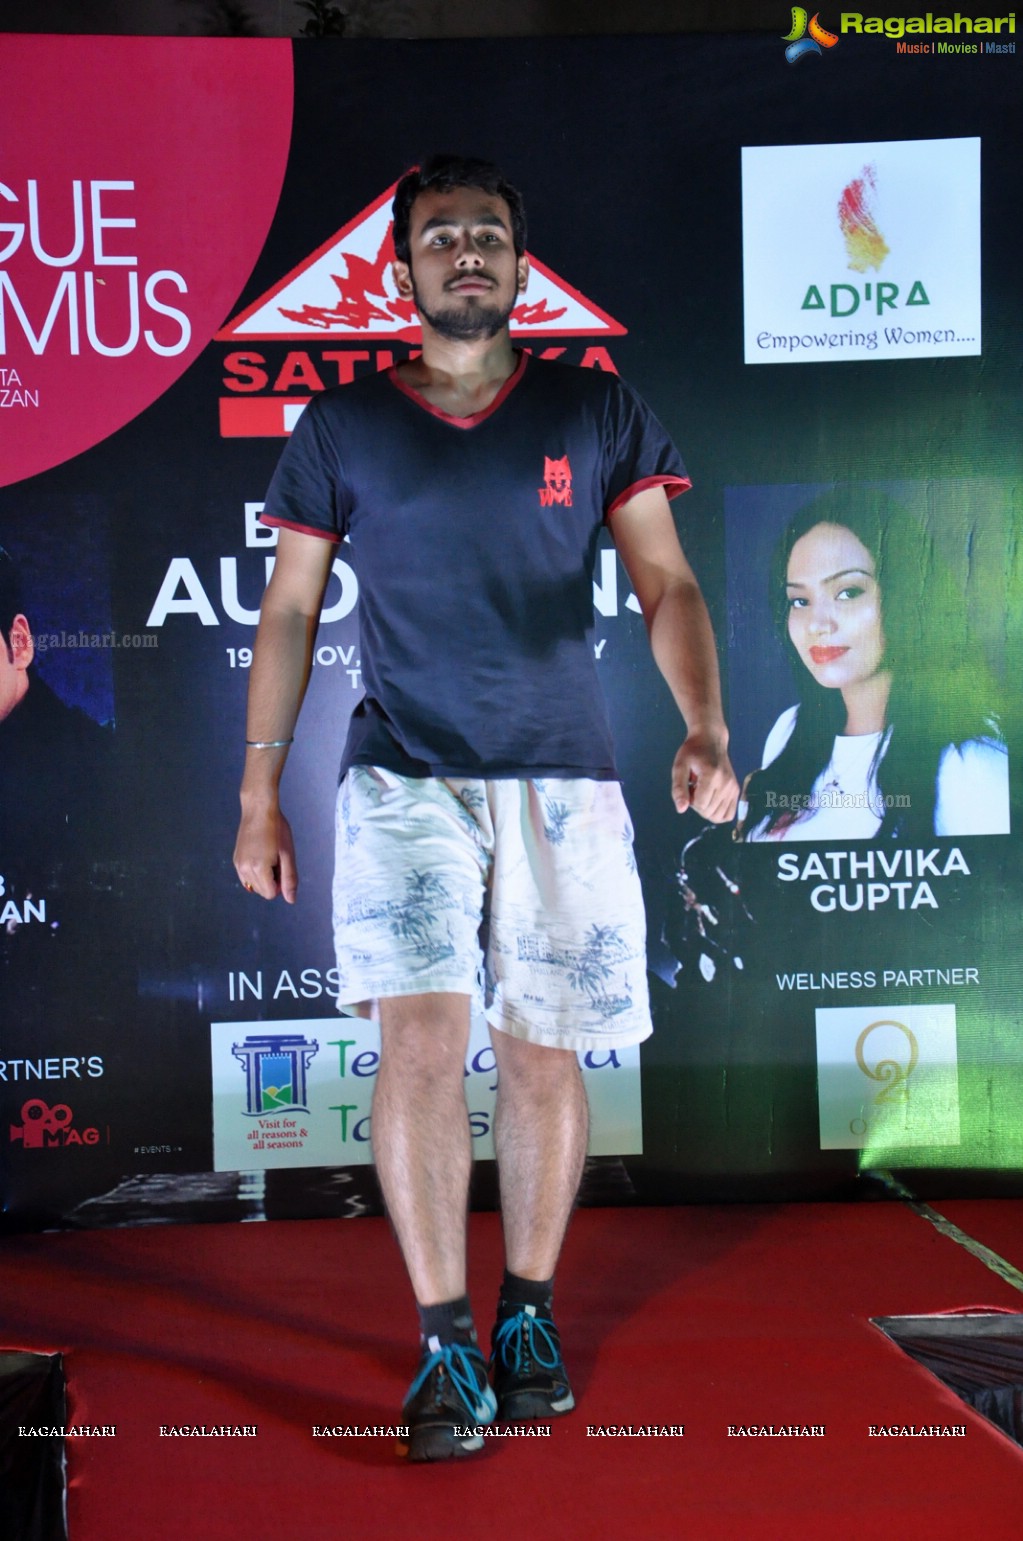 Adira Vogue for Animus Auditions at Bits Pilani, Hyderabad